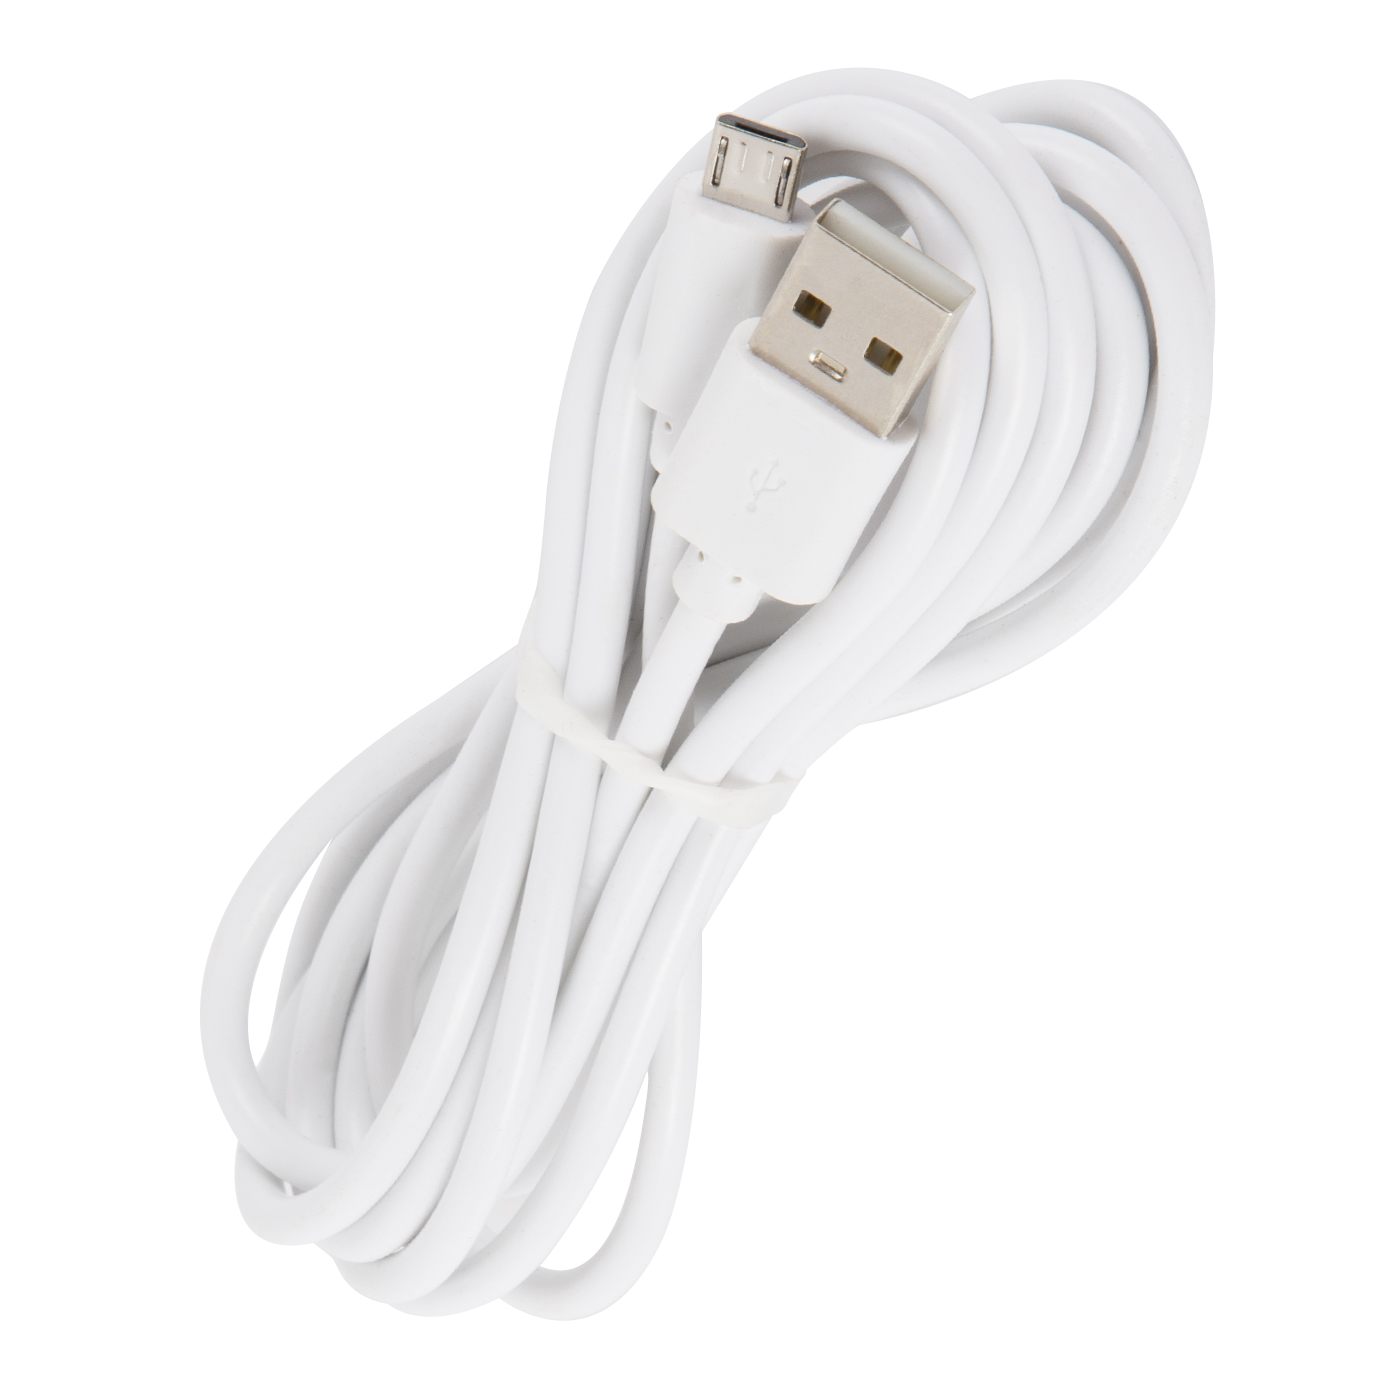 Дата-кабель RedLine USB - micro USB 2 метра белый - фото 1